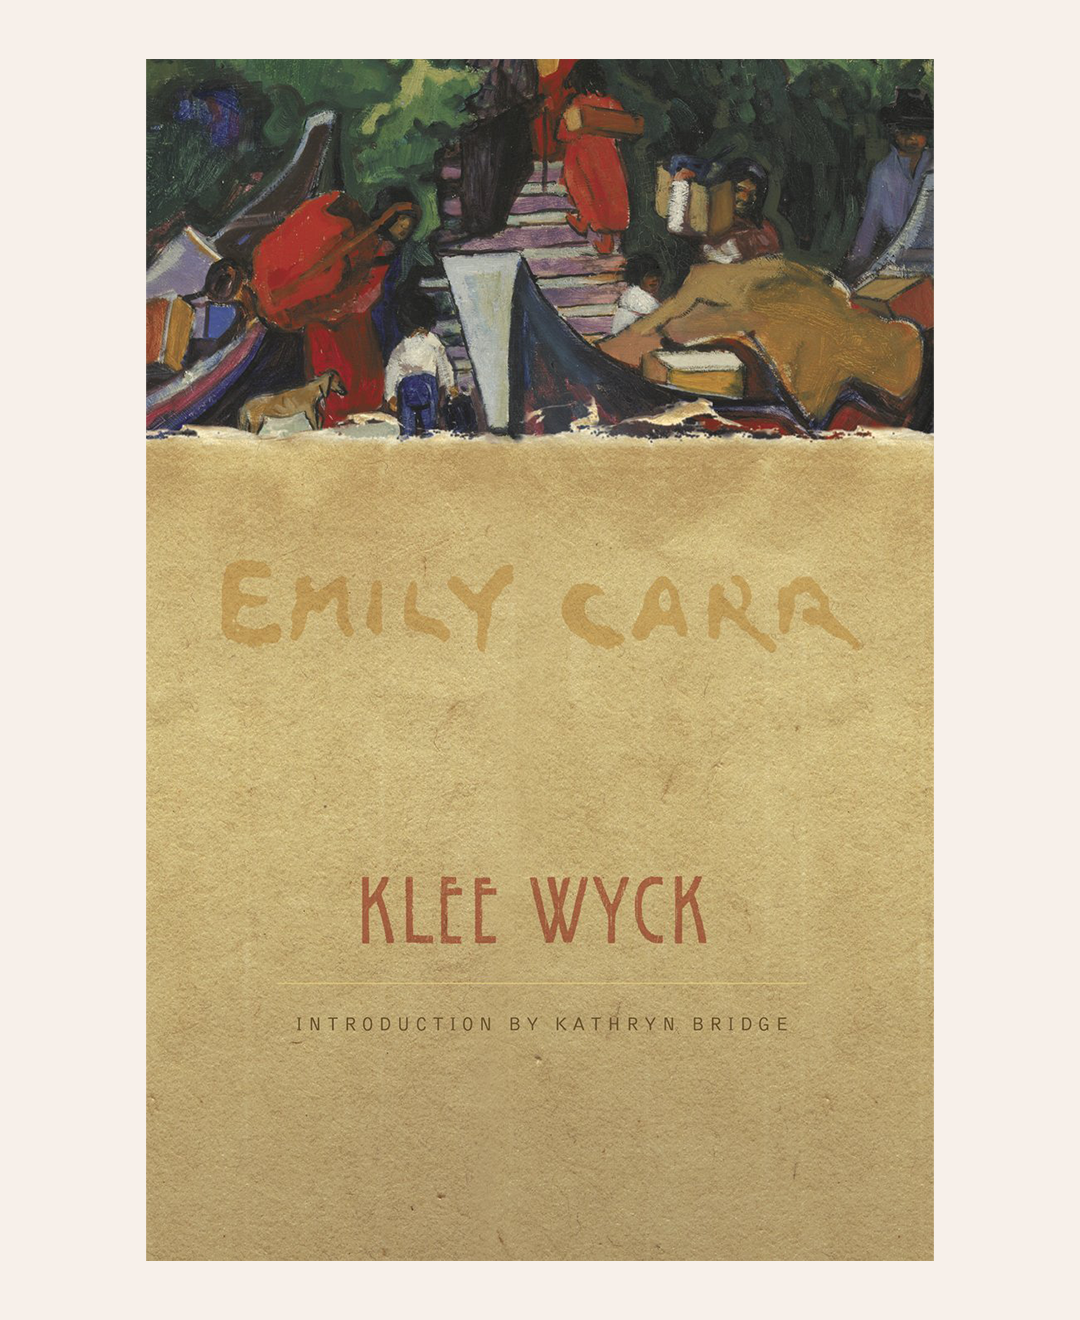 Klee Wyck By Emily Carr